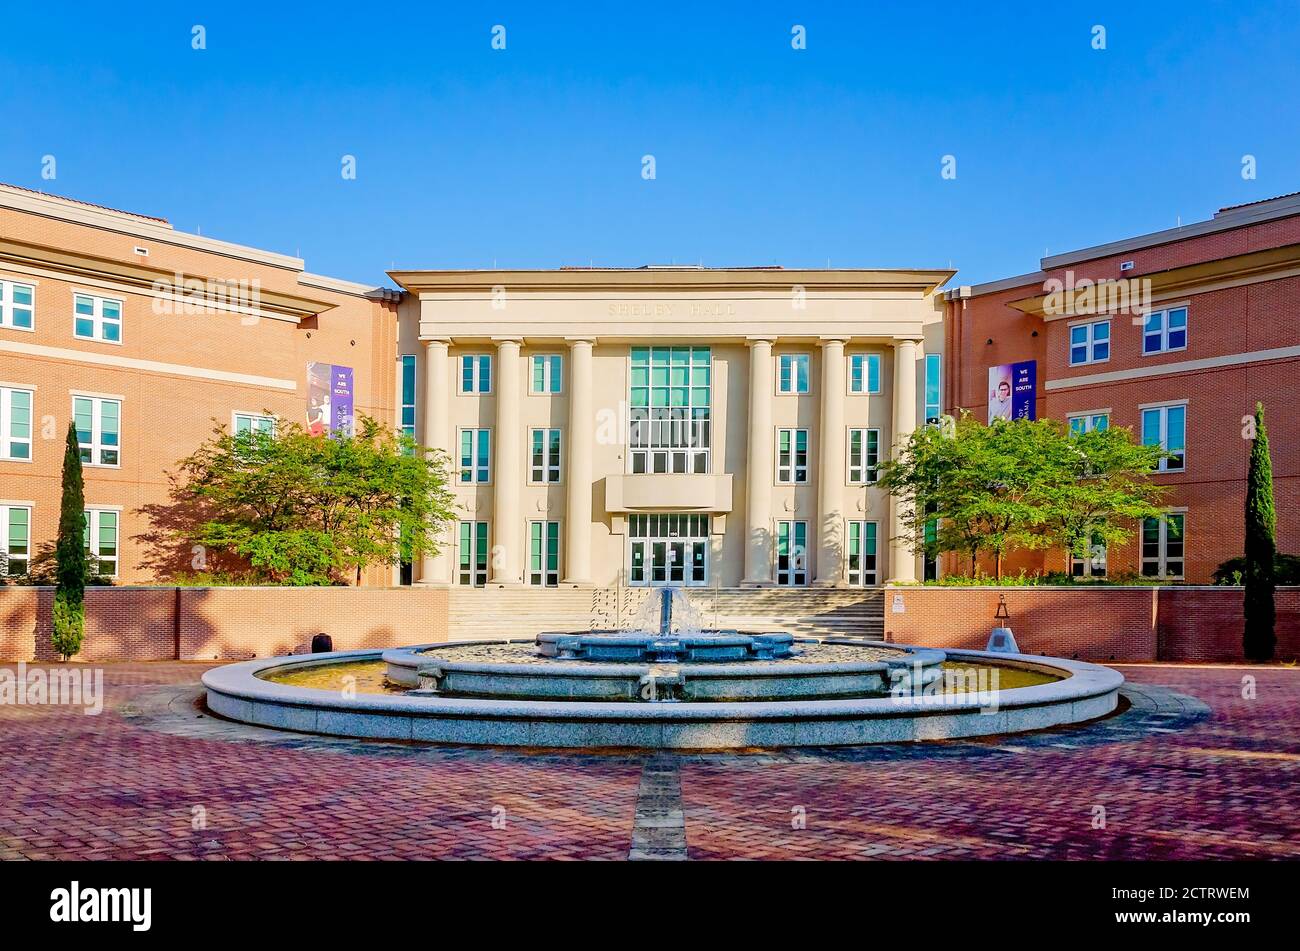 Shelby Hall, wo sich das College of Engineering befindet, ist an der University of South Alabama am 22. August 2020 in Mobile, Alabama abgebildet. Stockfoto